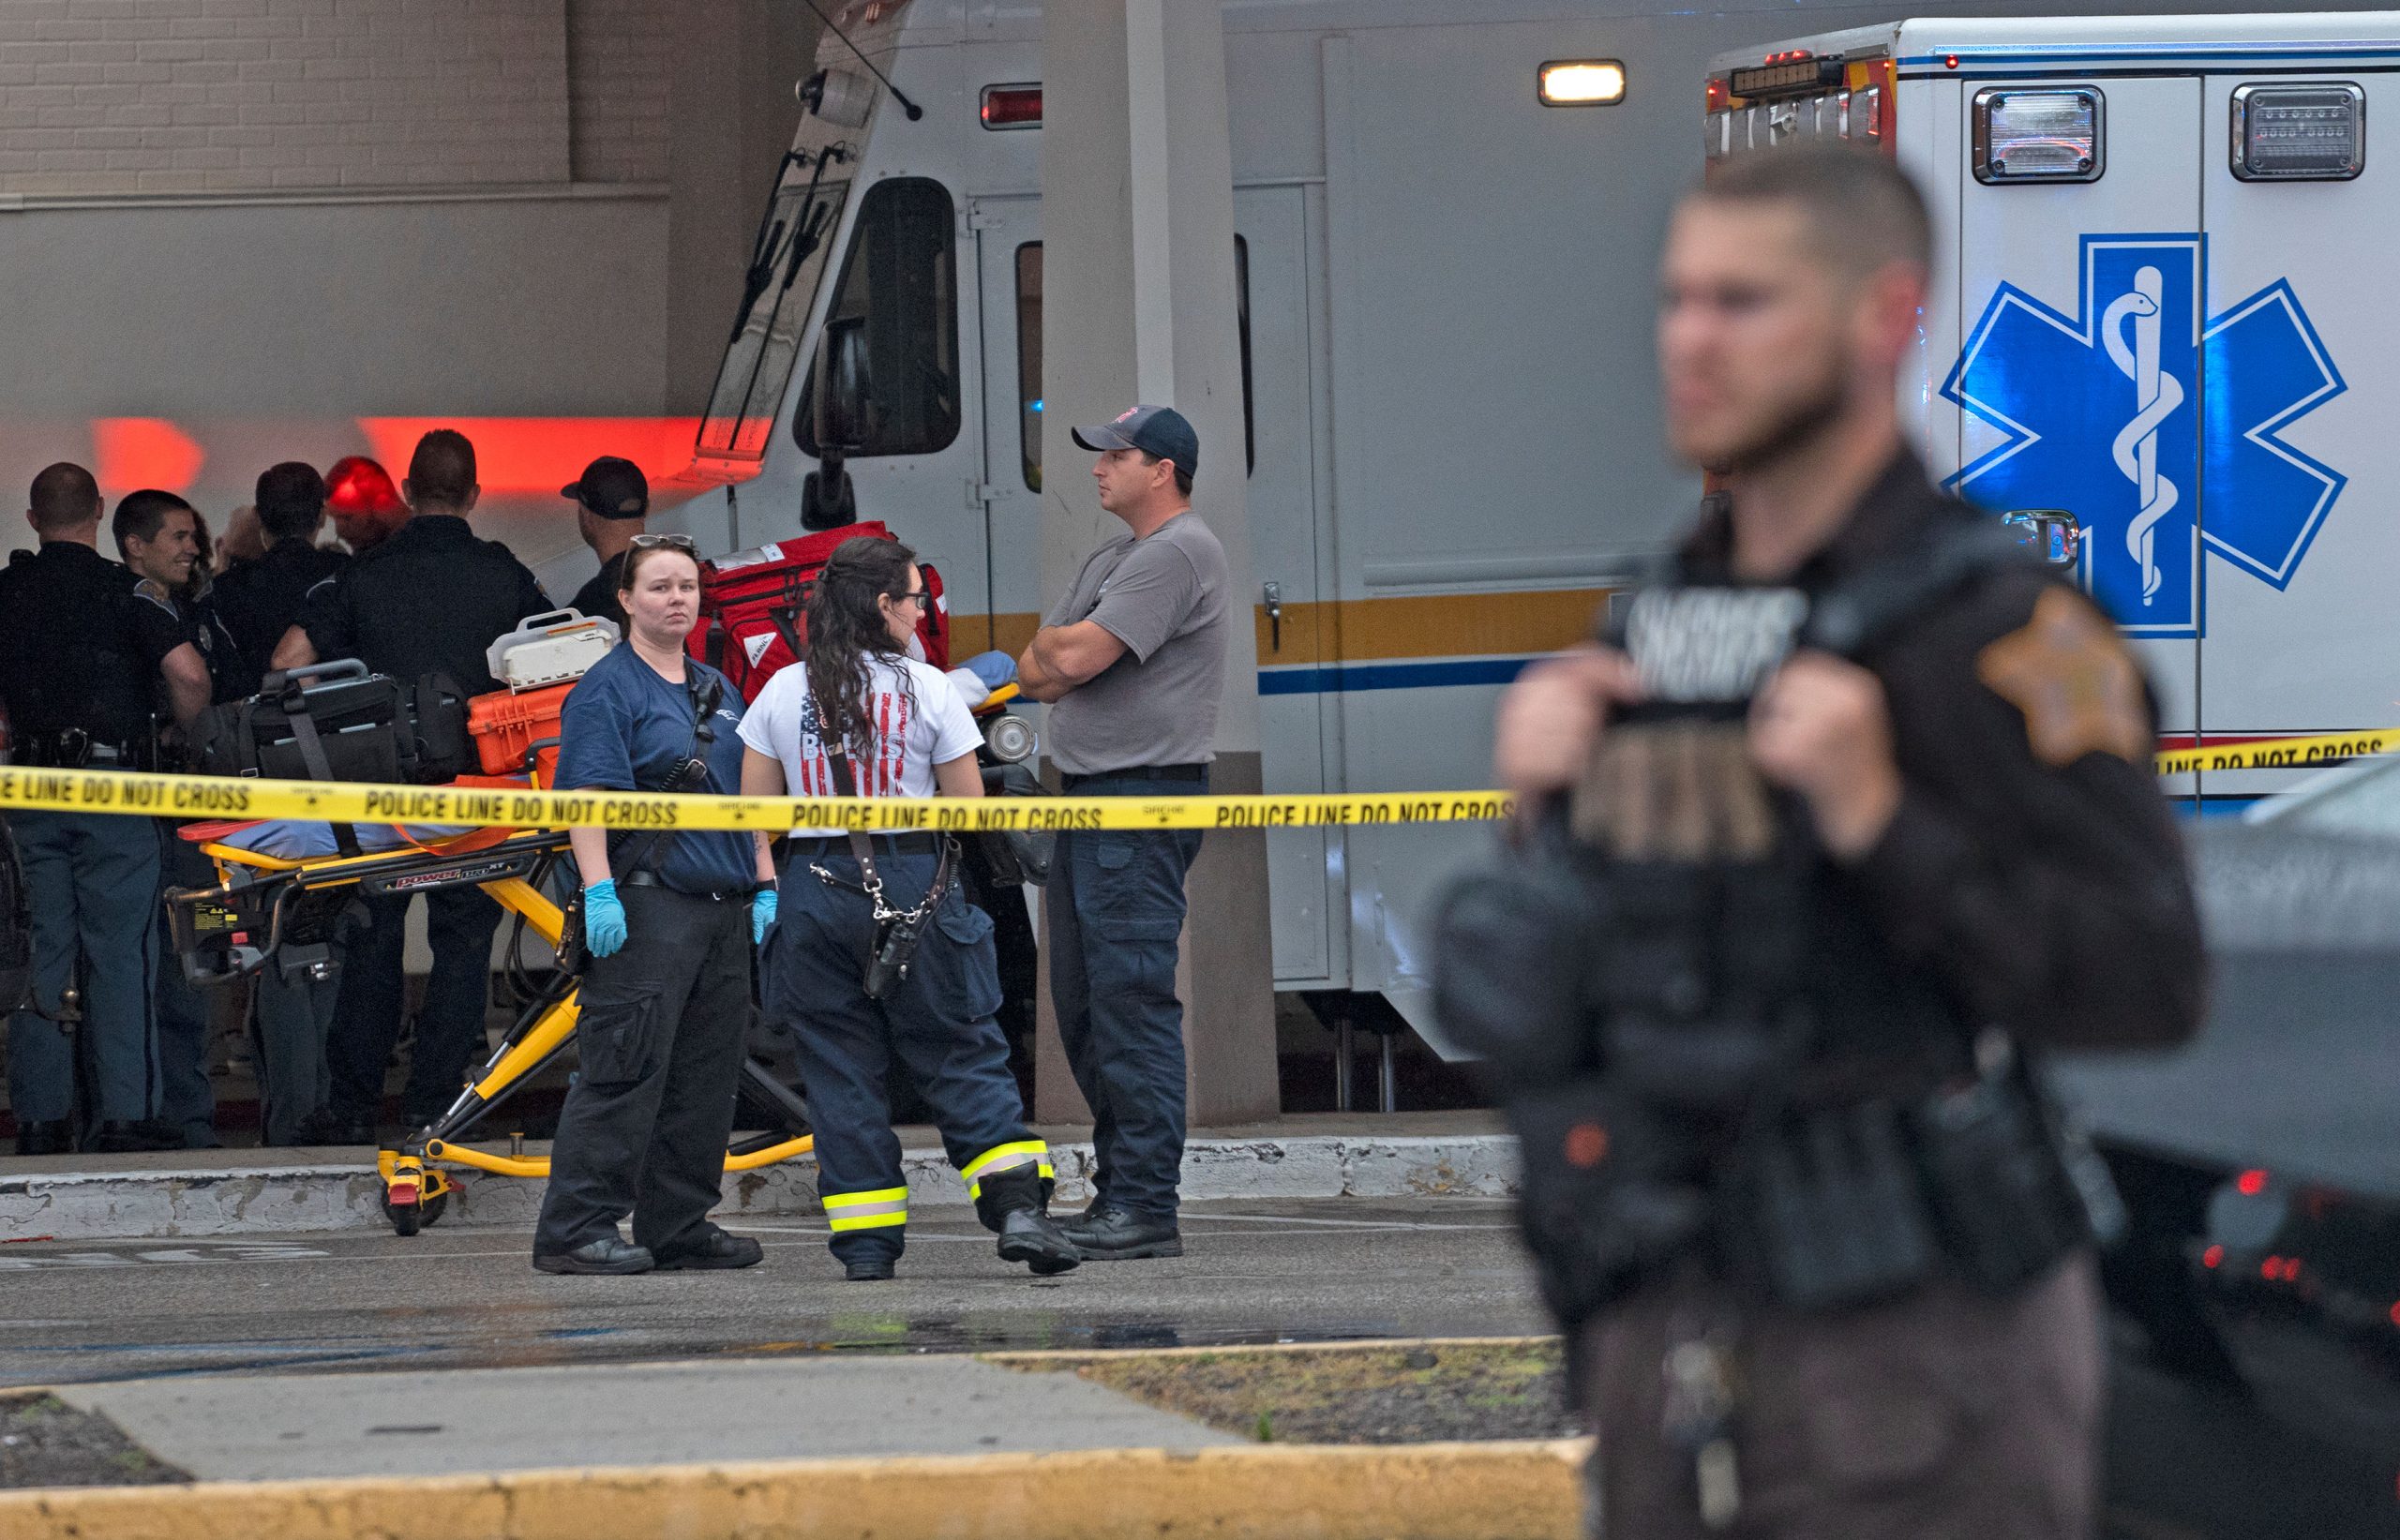 Greenwood Park mall shooting: Family of gunman shocked, extend condolences